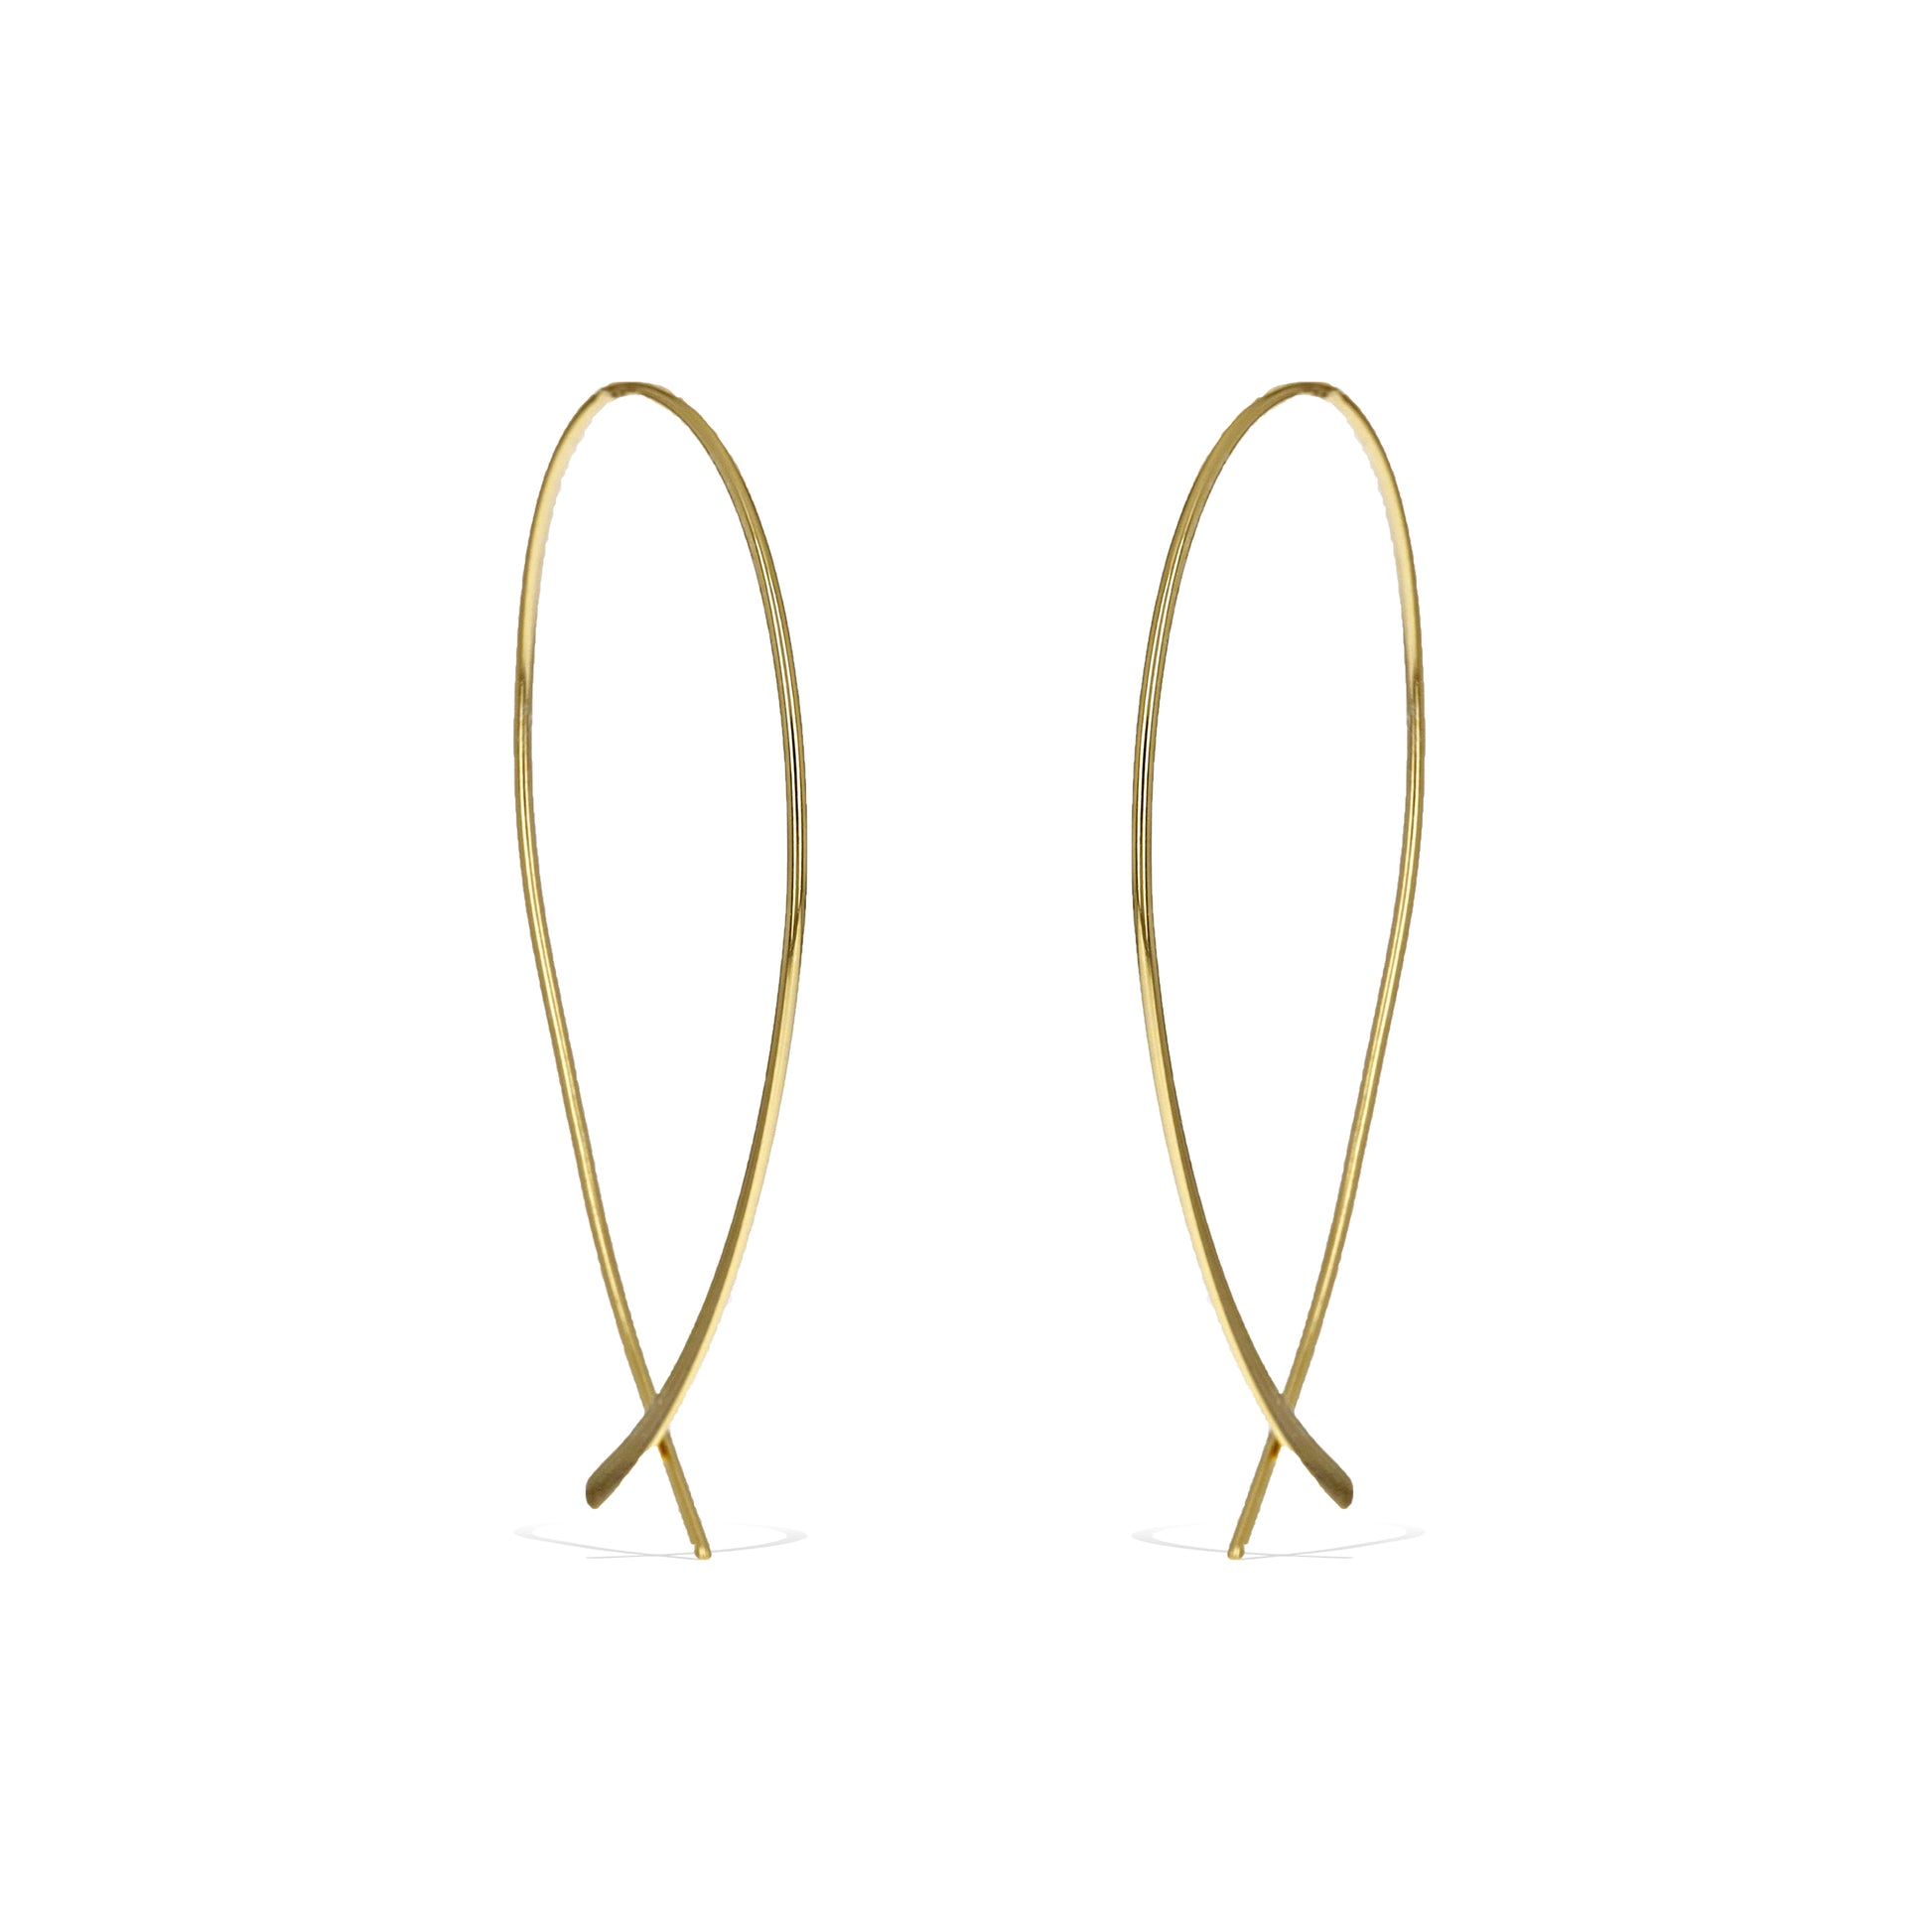 Thin gold threader hoop earrings - Alexandra Marks